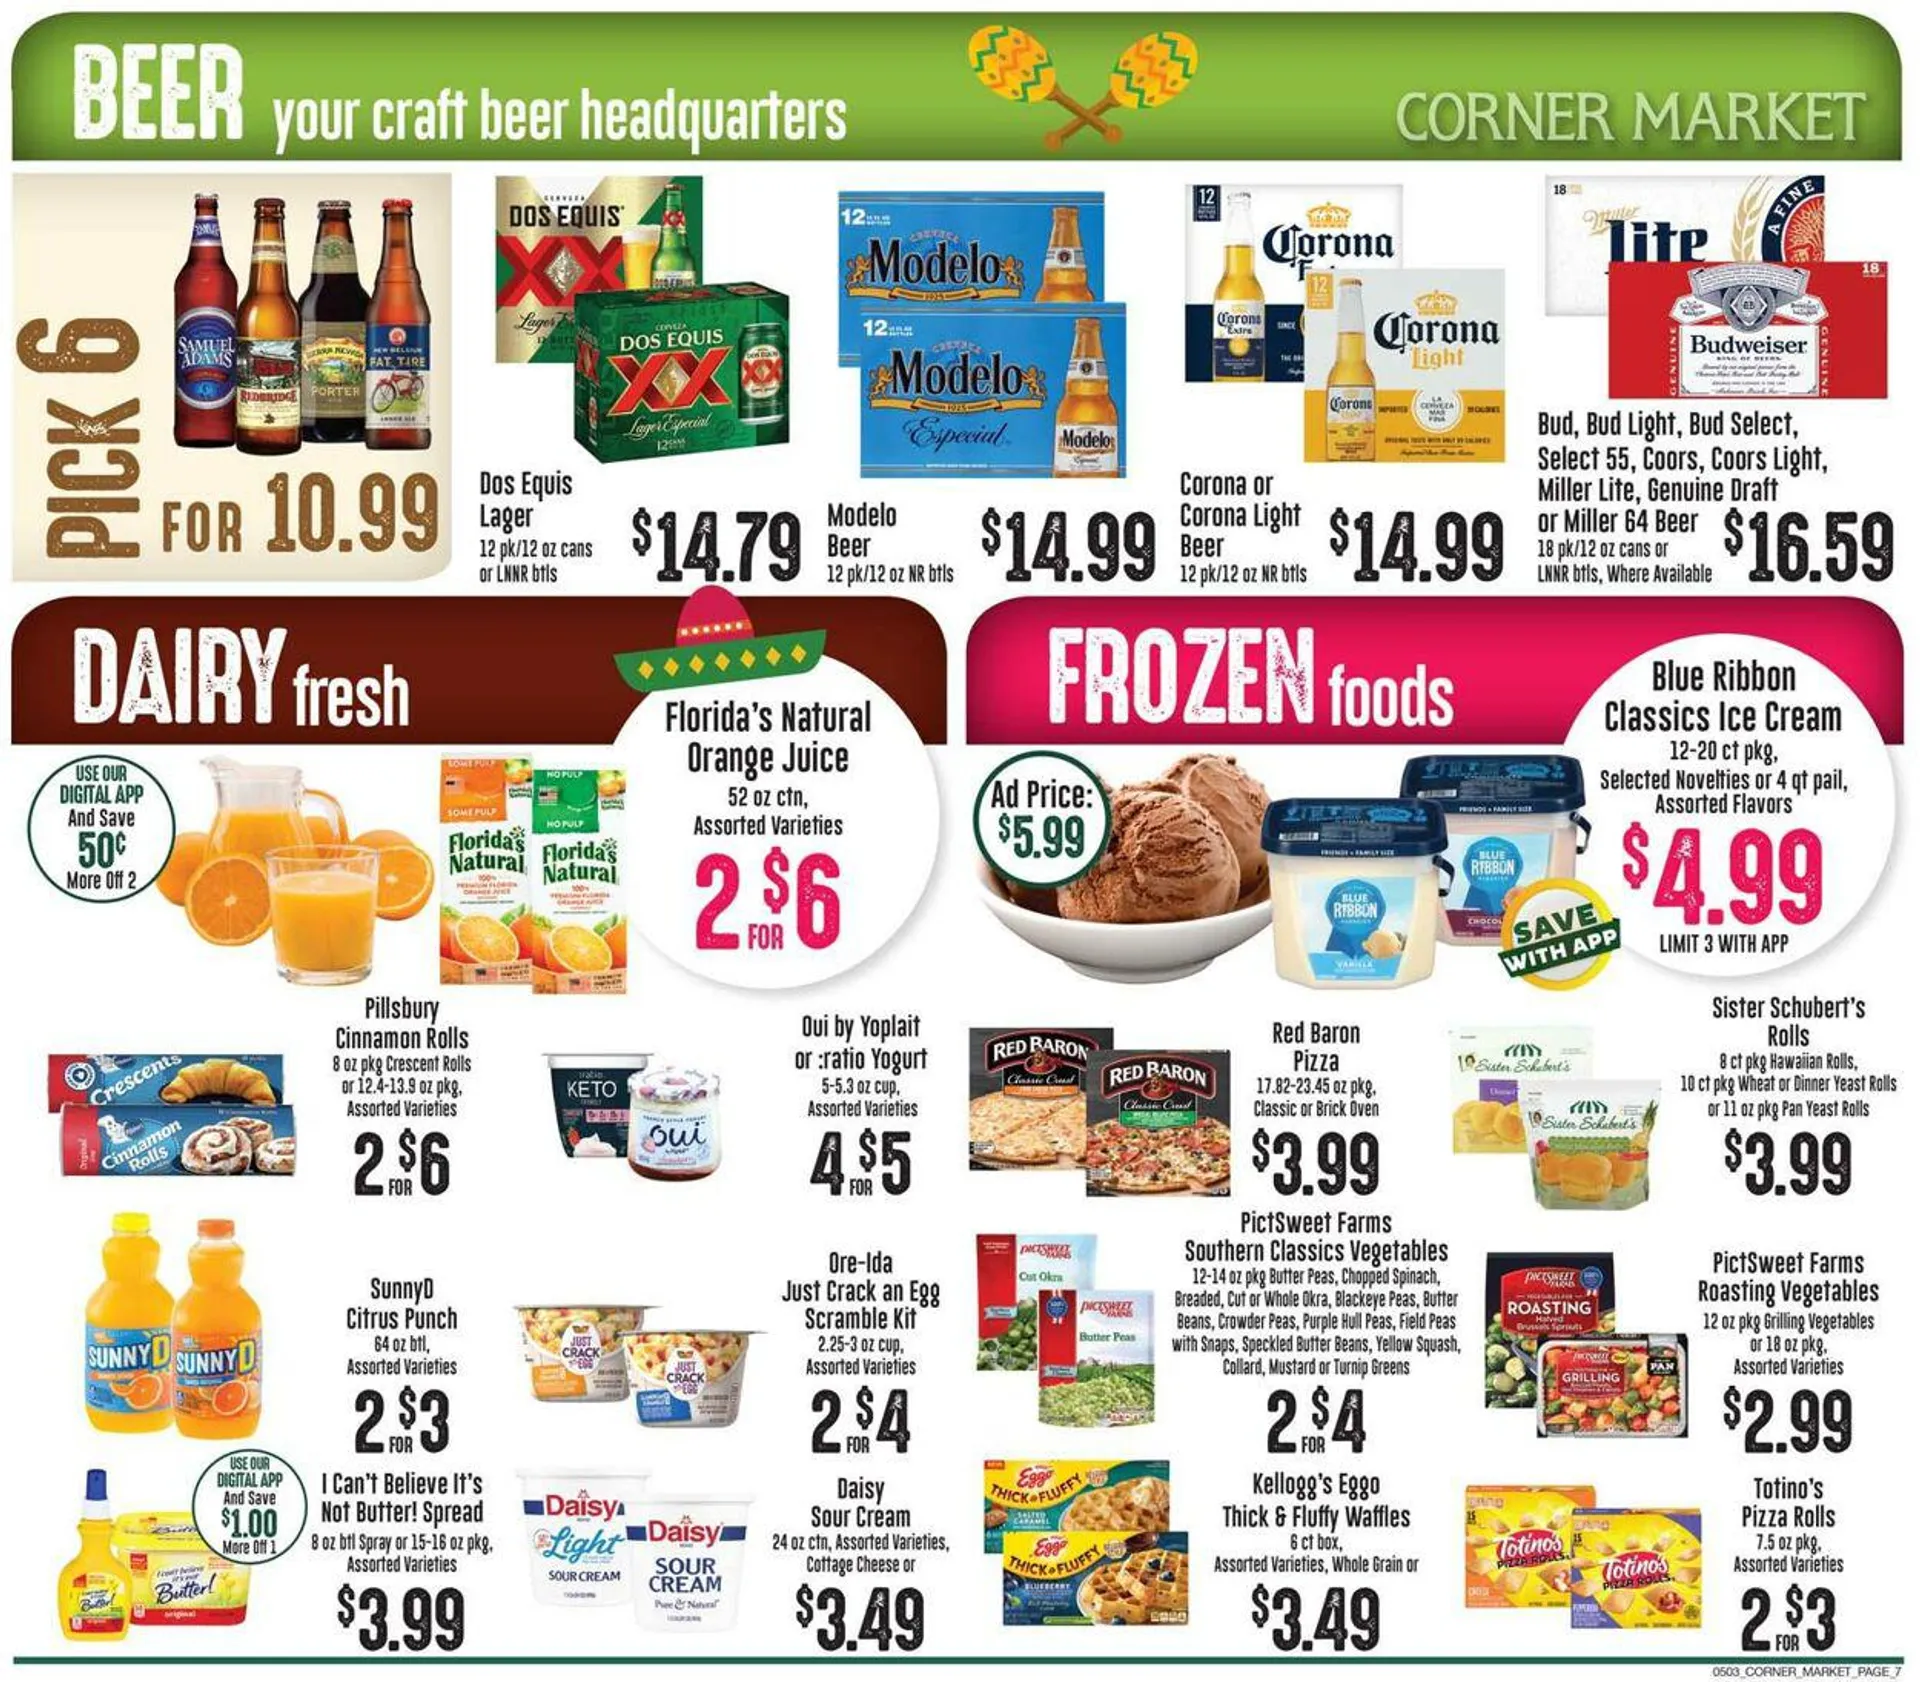 Corner Market Current weekly ad - 7